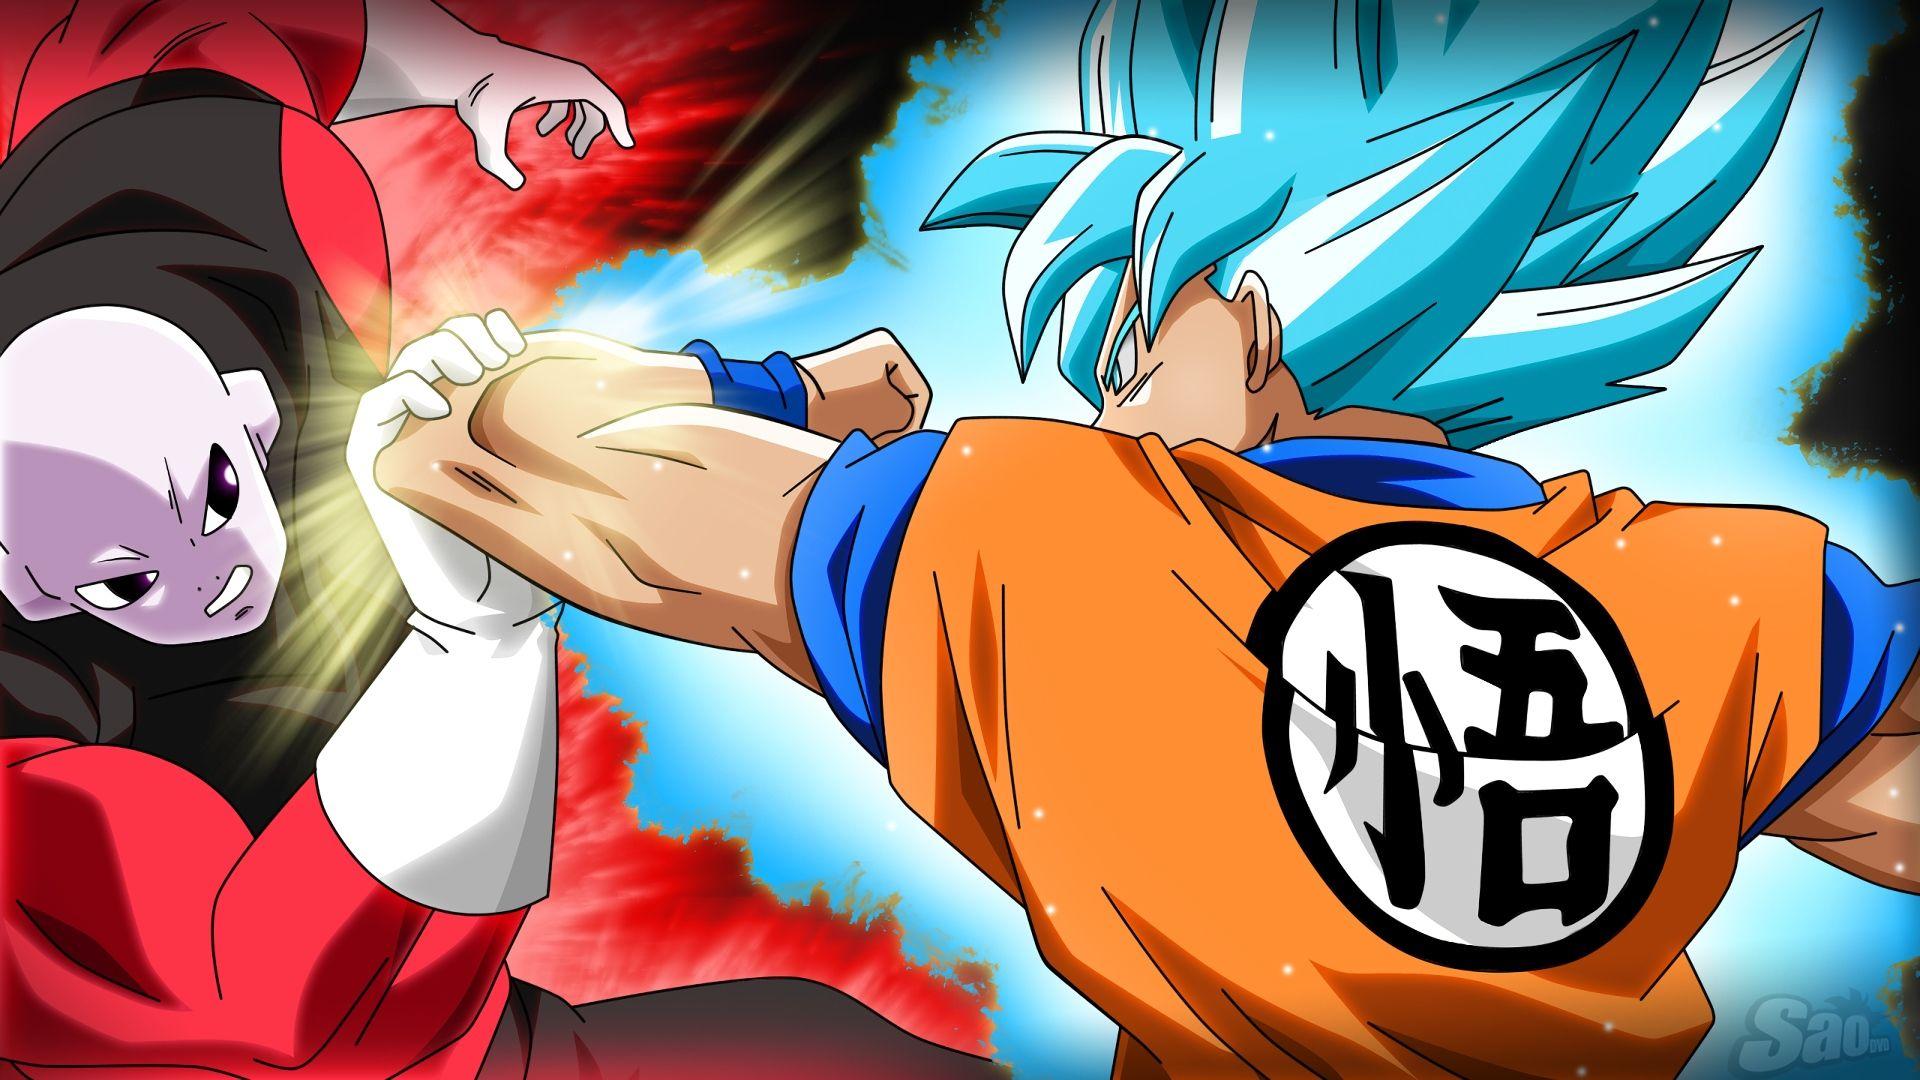 Jiren vs Goku Blue Dragon Ball Super. Wallpaper